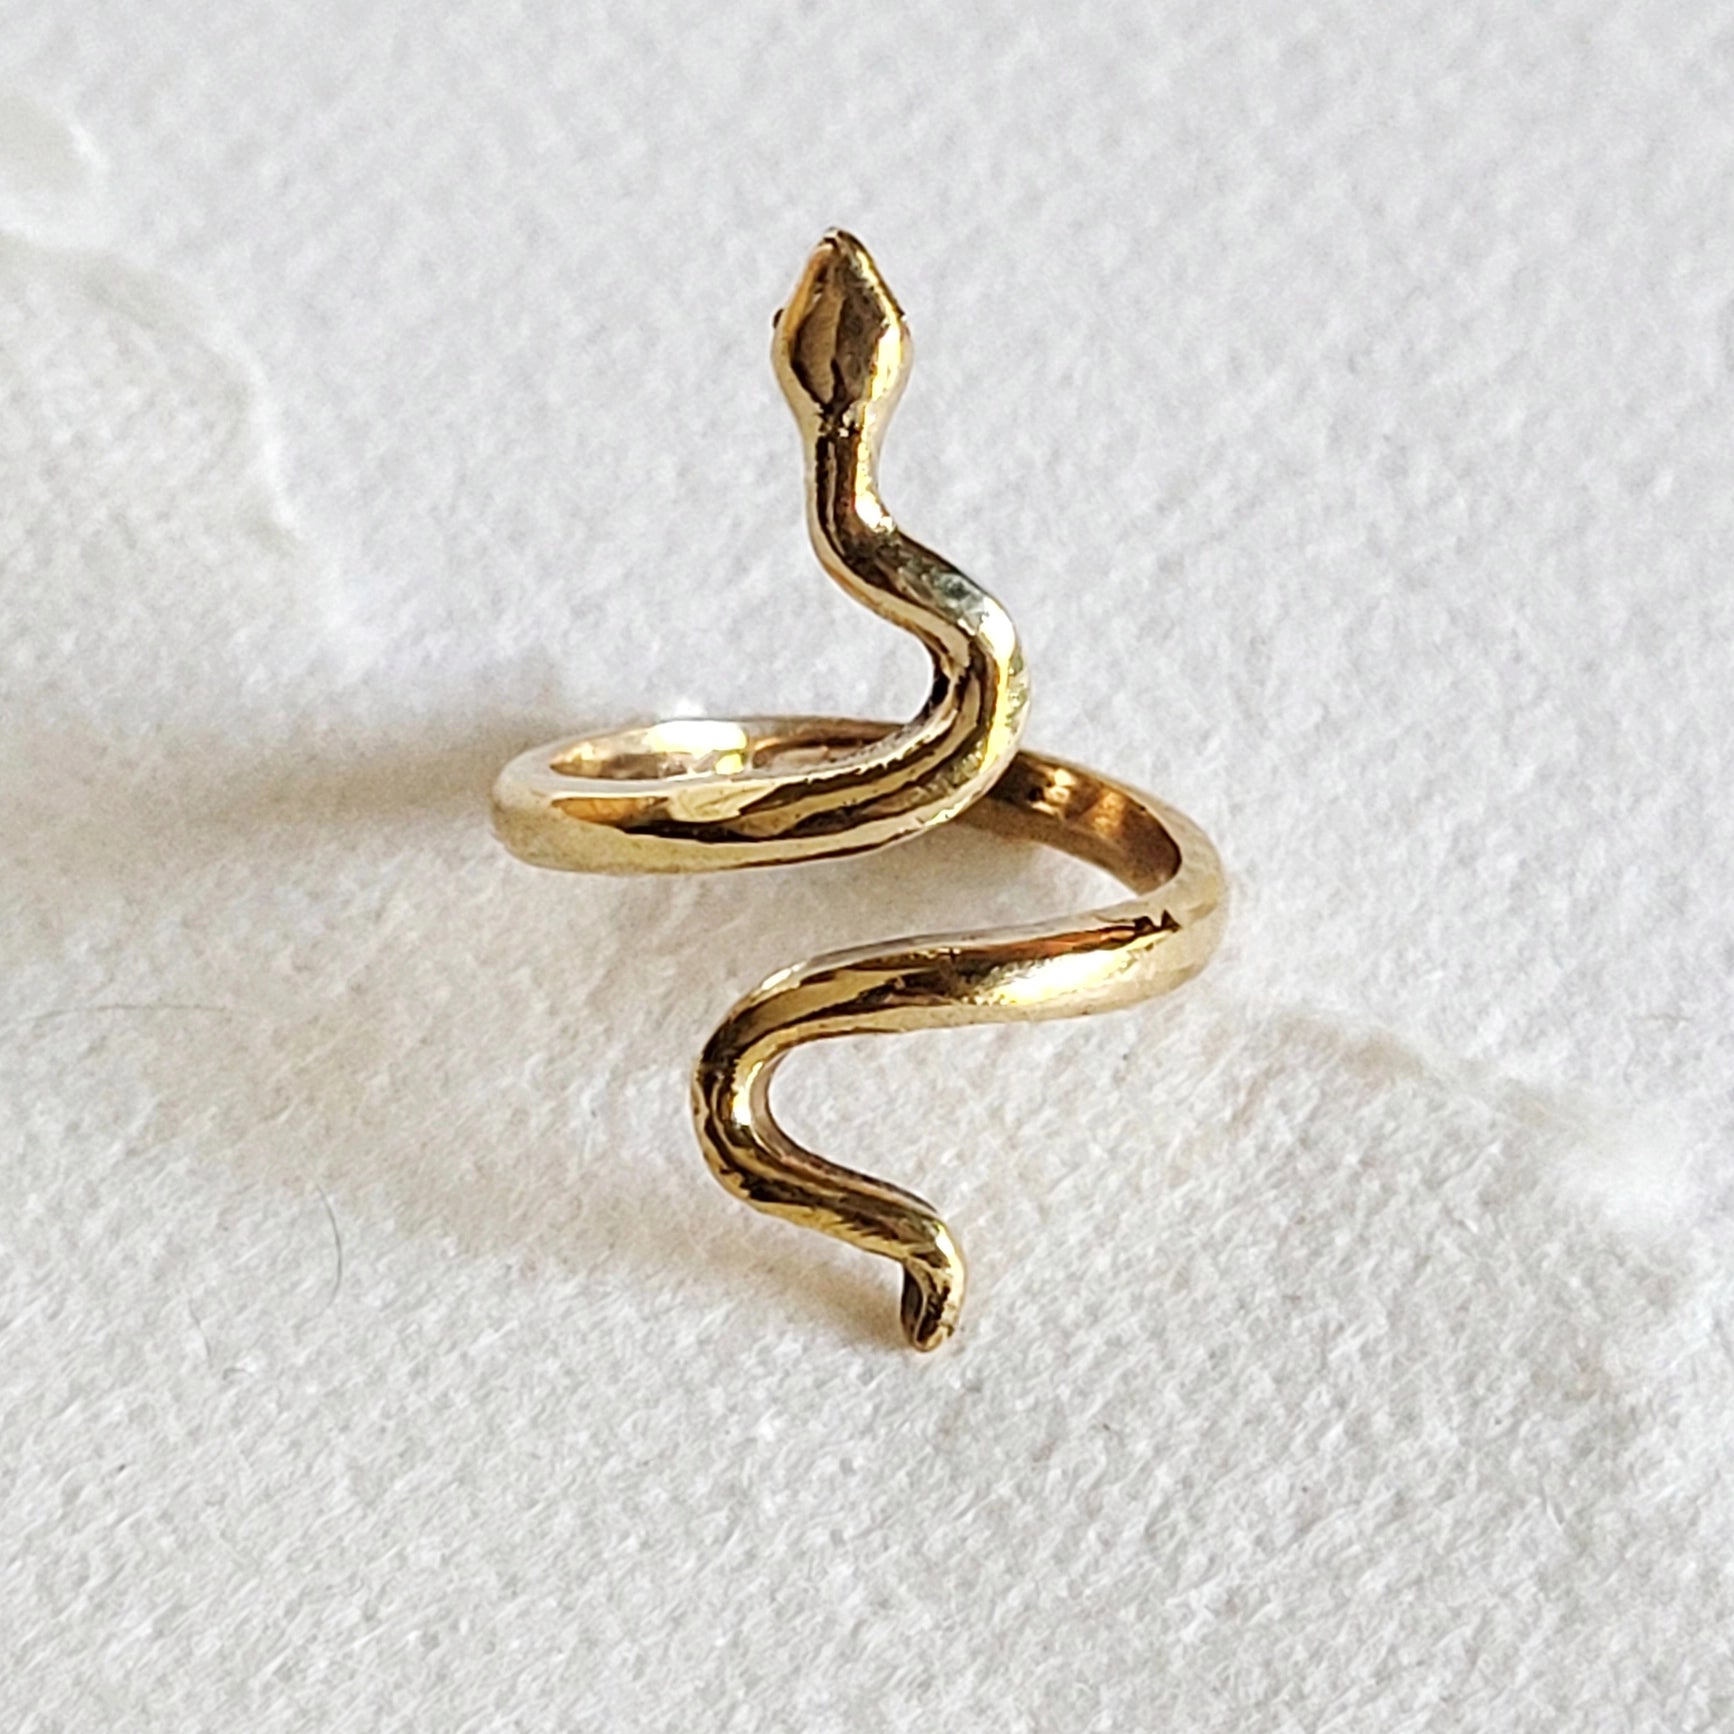 Handmade Adjustable Brass Snake Ring